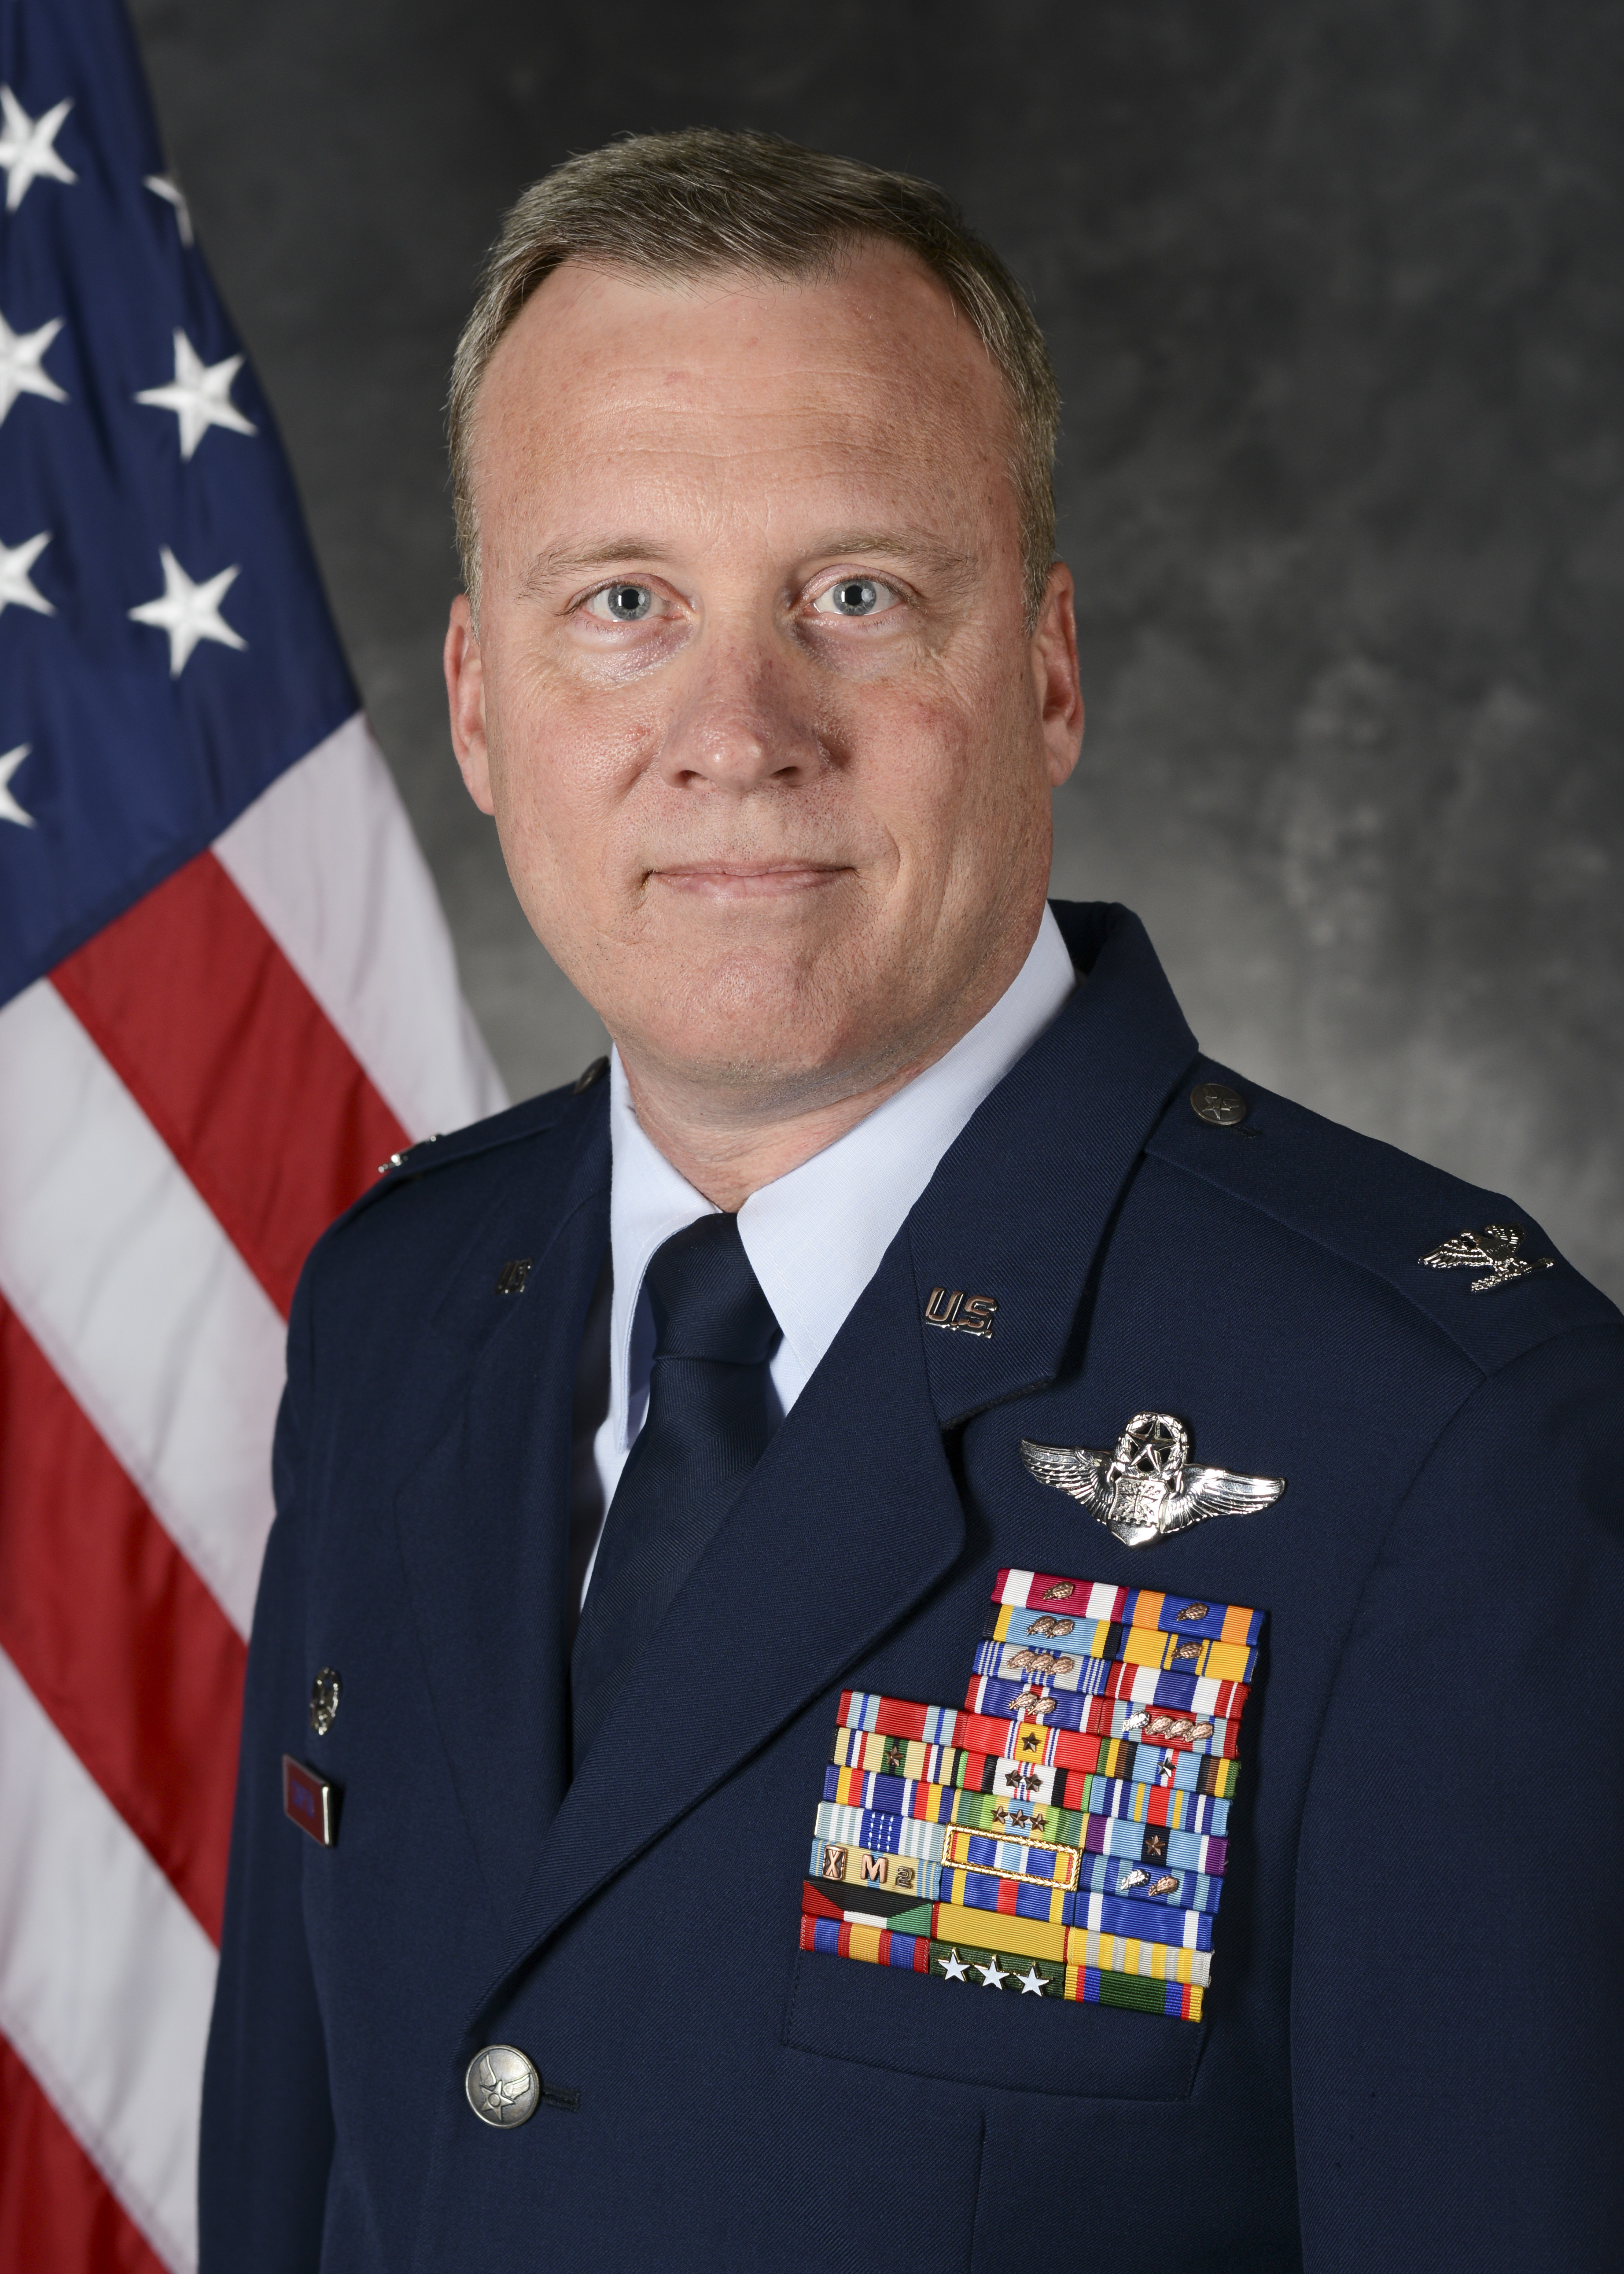 Lt. Col. David W. Compton